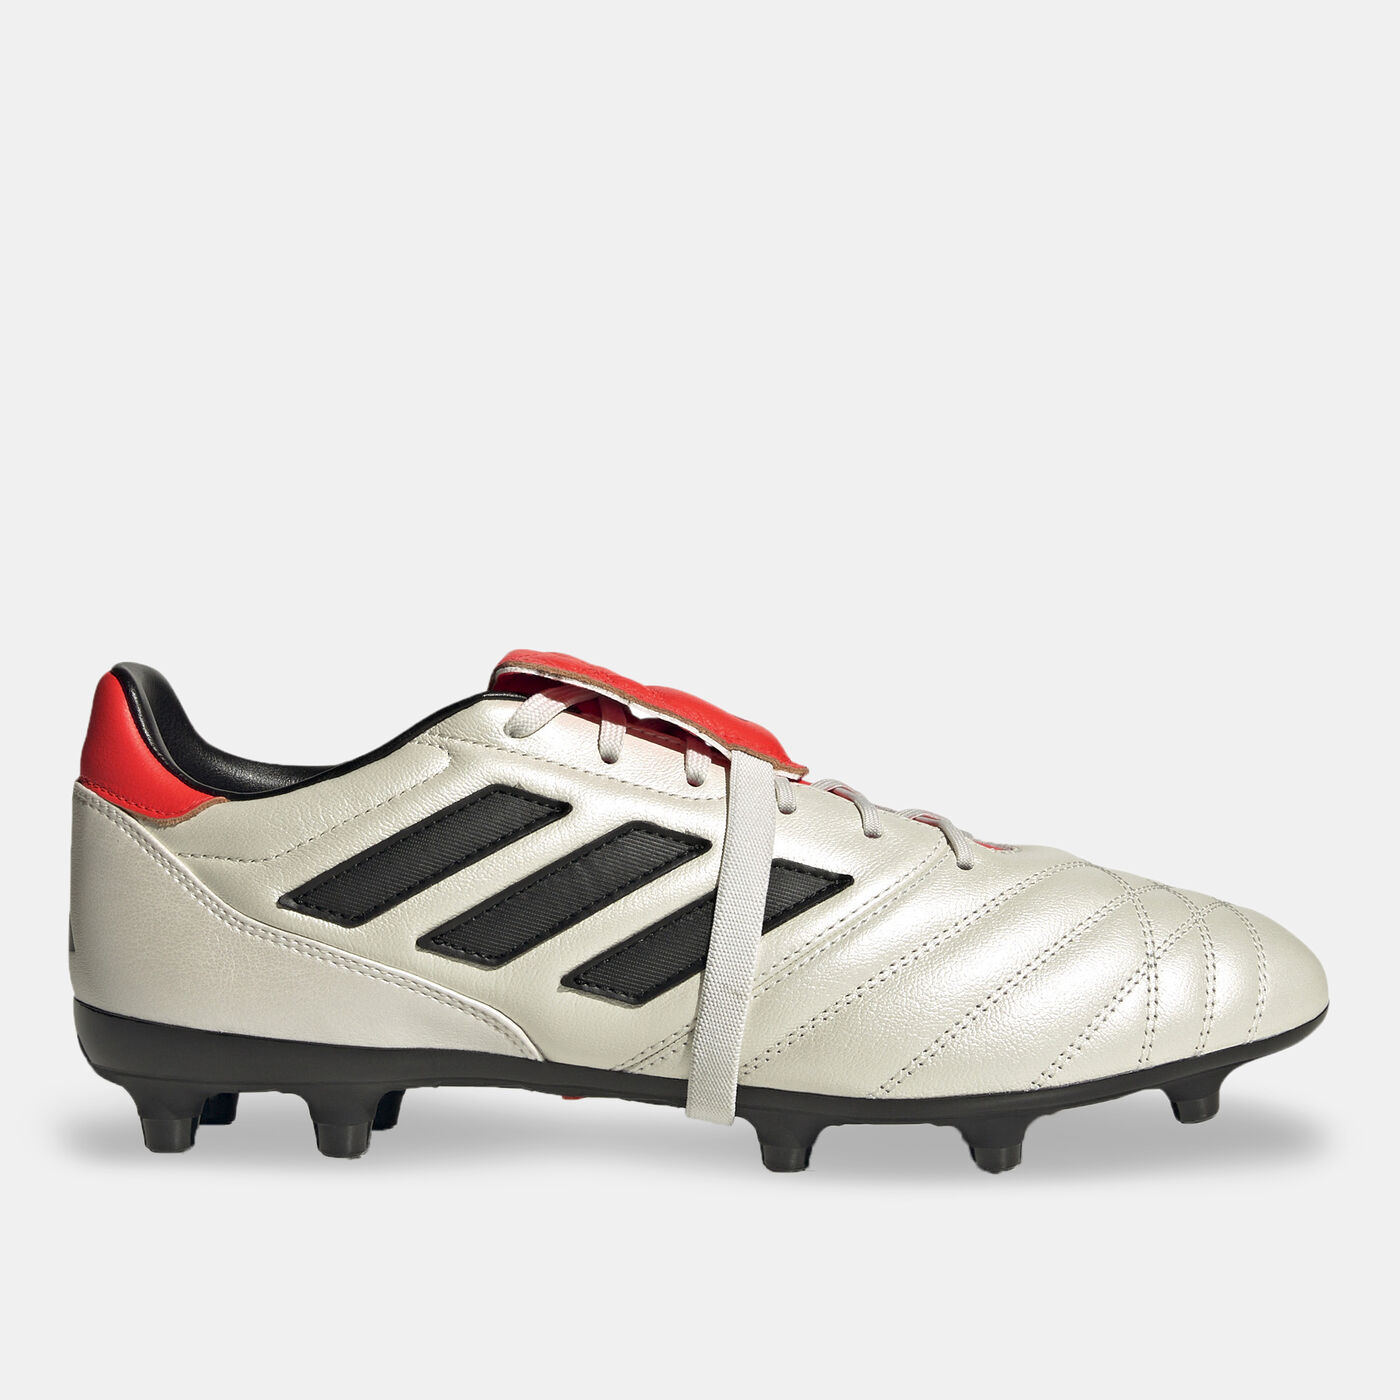 Men's Copa Gloro Firm Ground Football Shoes